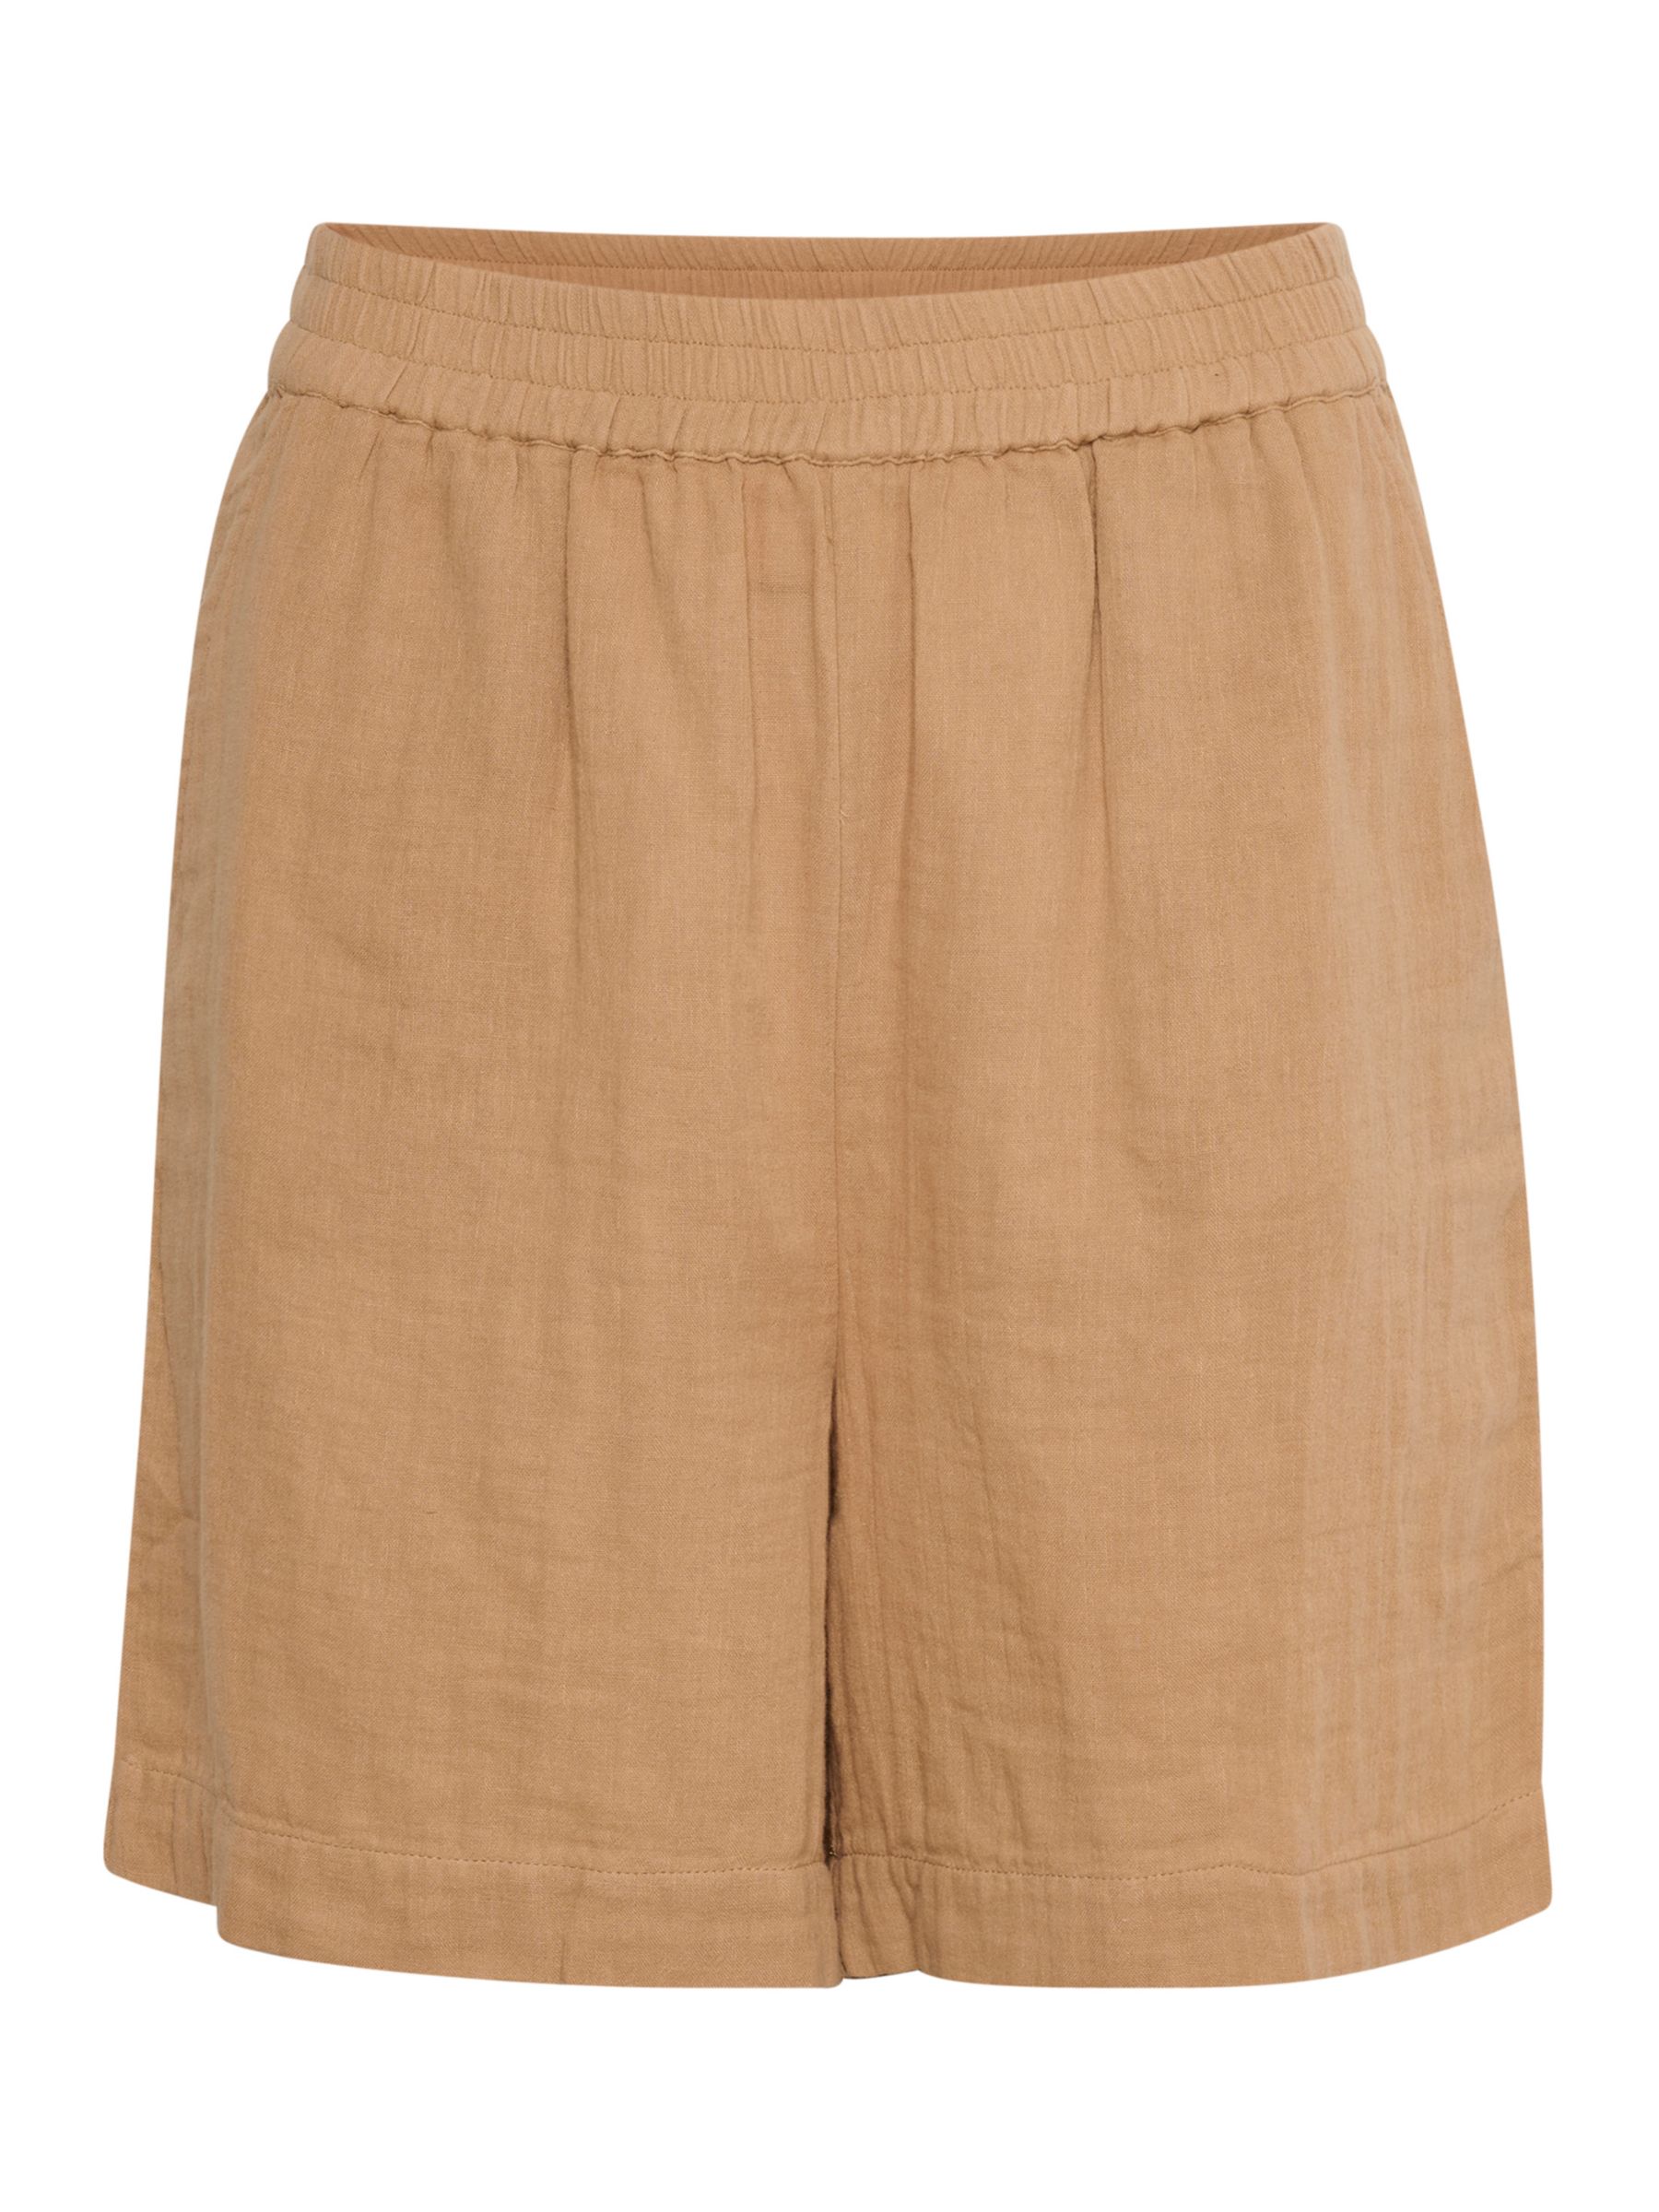 Saint Tropez Urika Elastic Waist Shorts, Brown, XS